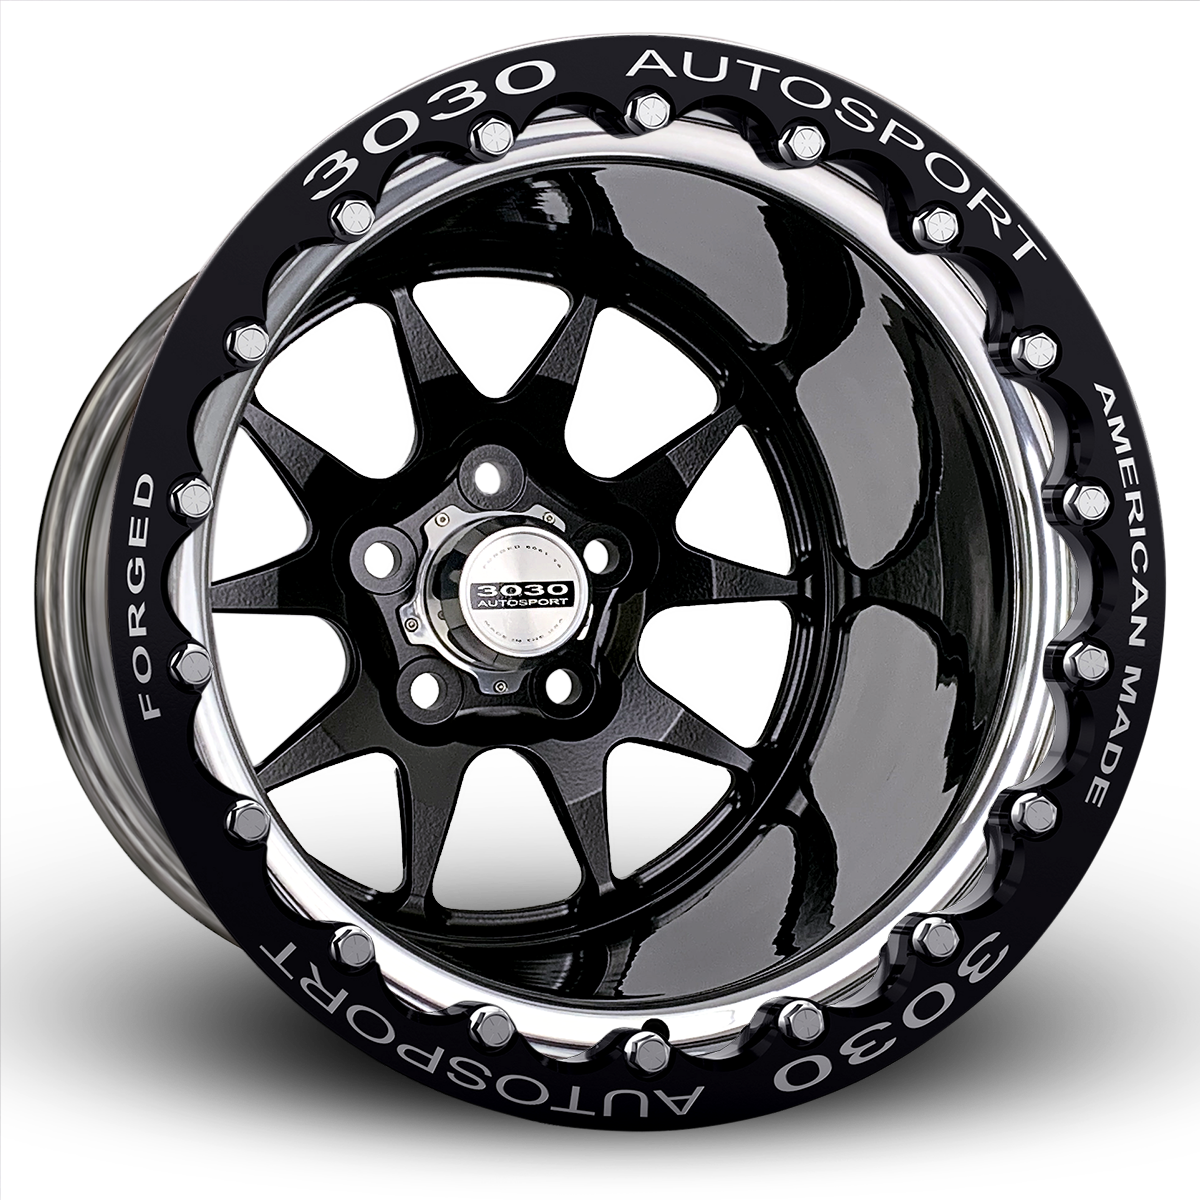 MACH-10 Double-Beadlock Wheel, Size: 15x12", Bolt Pattern: 5x5", Backspace: 6" [Black/Polished]